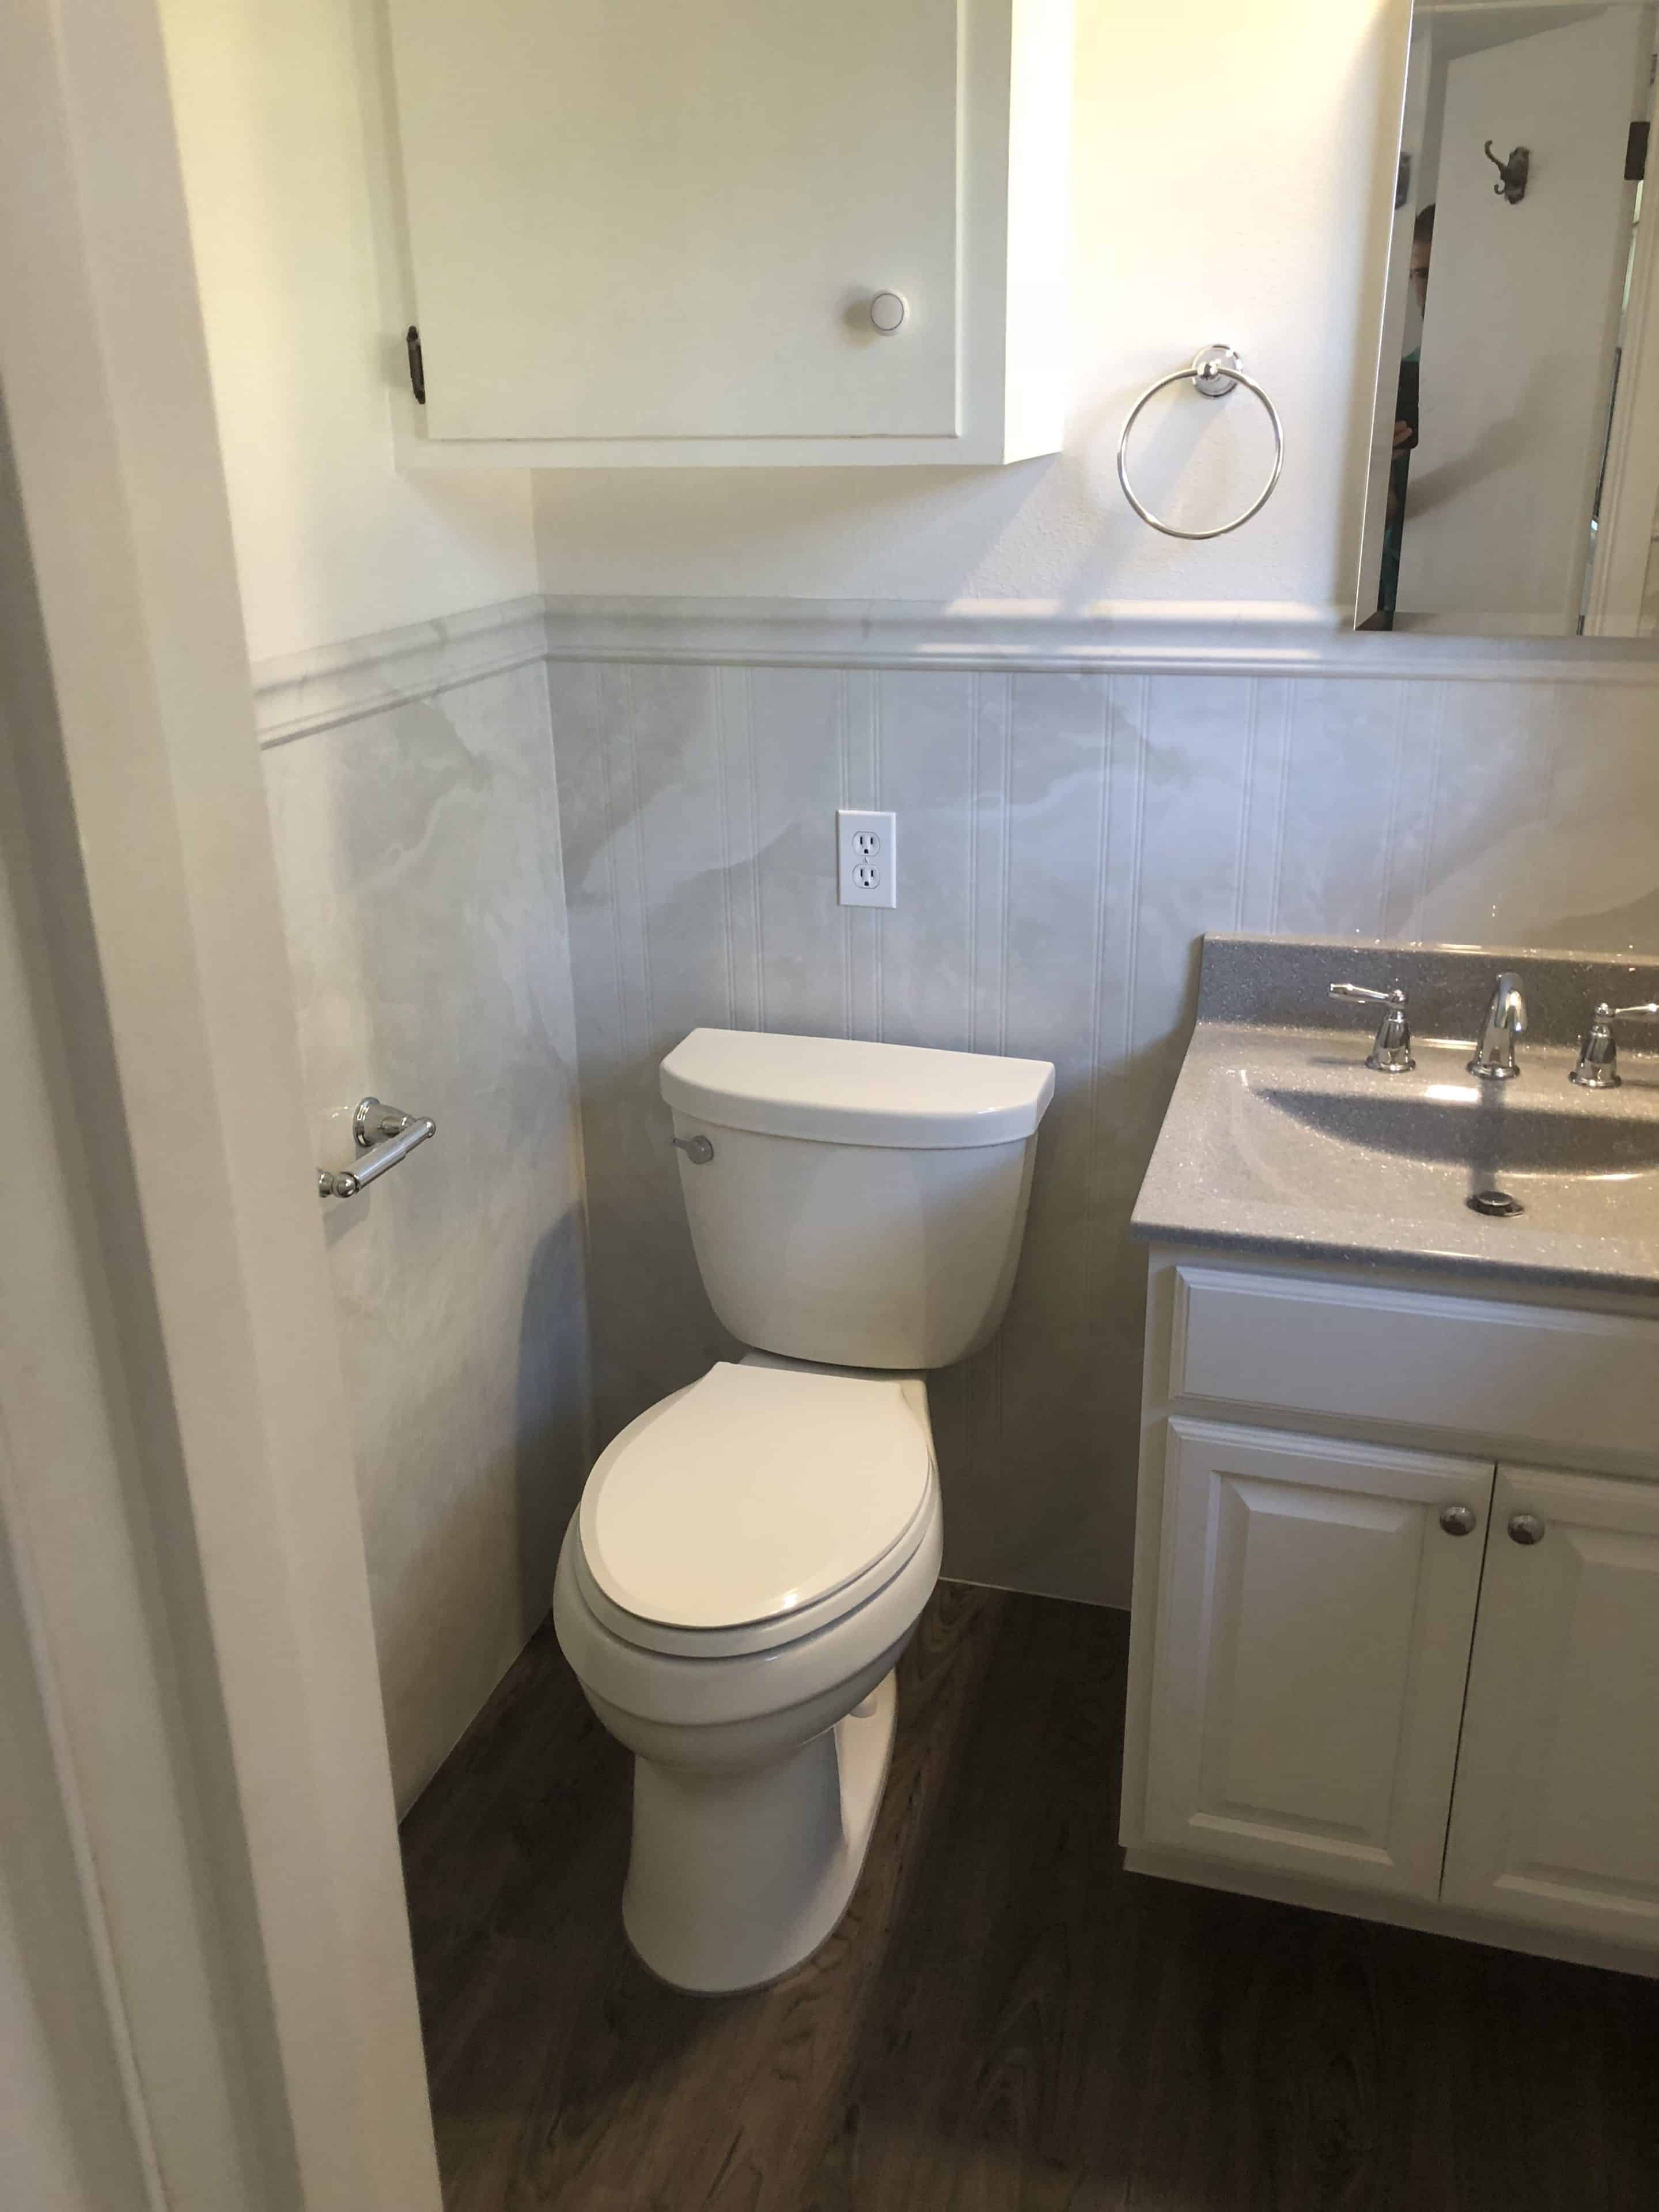 Plainview Bathroom Remodel Cost 